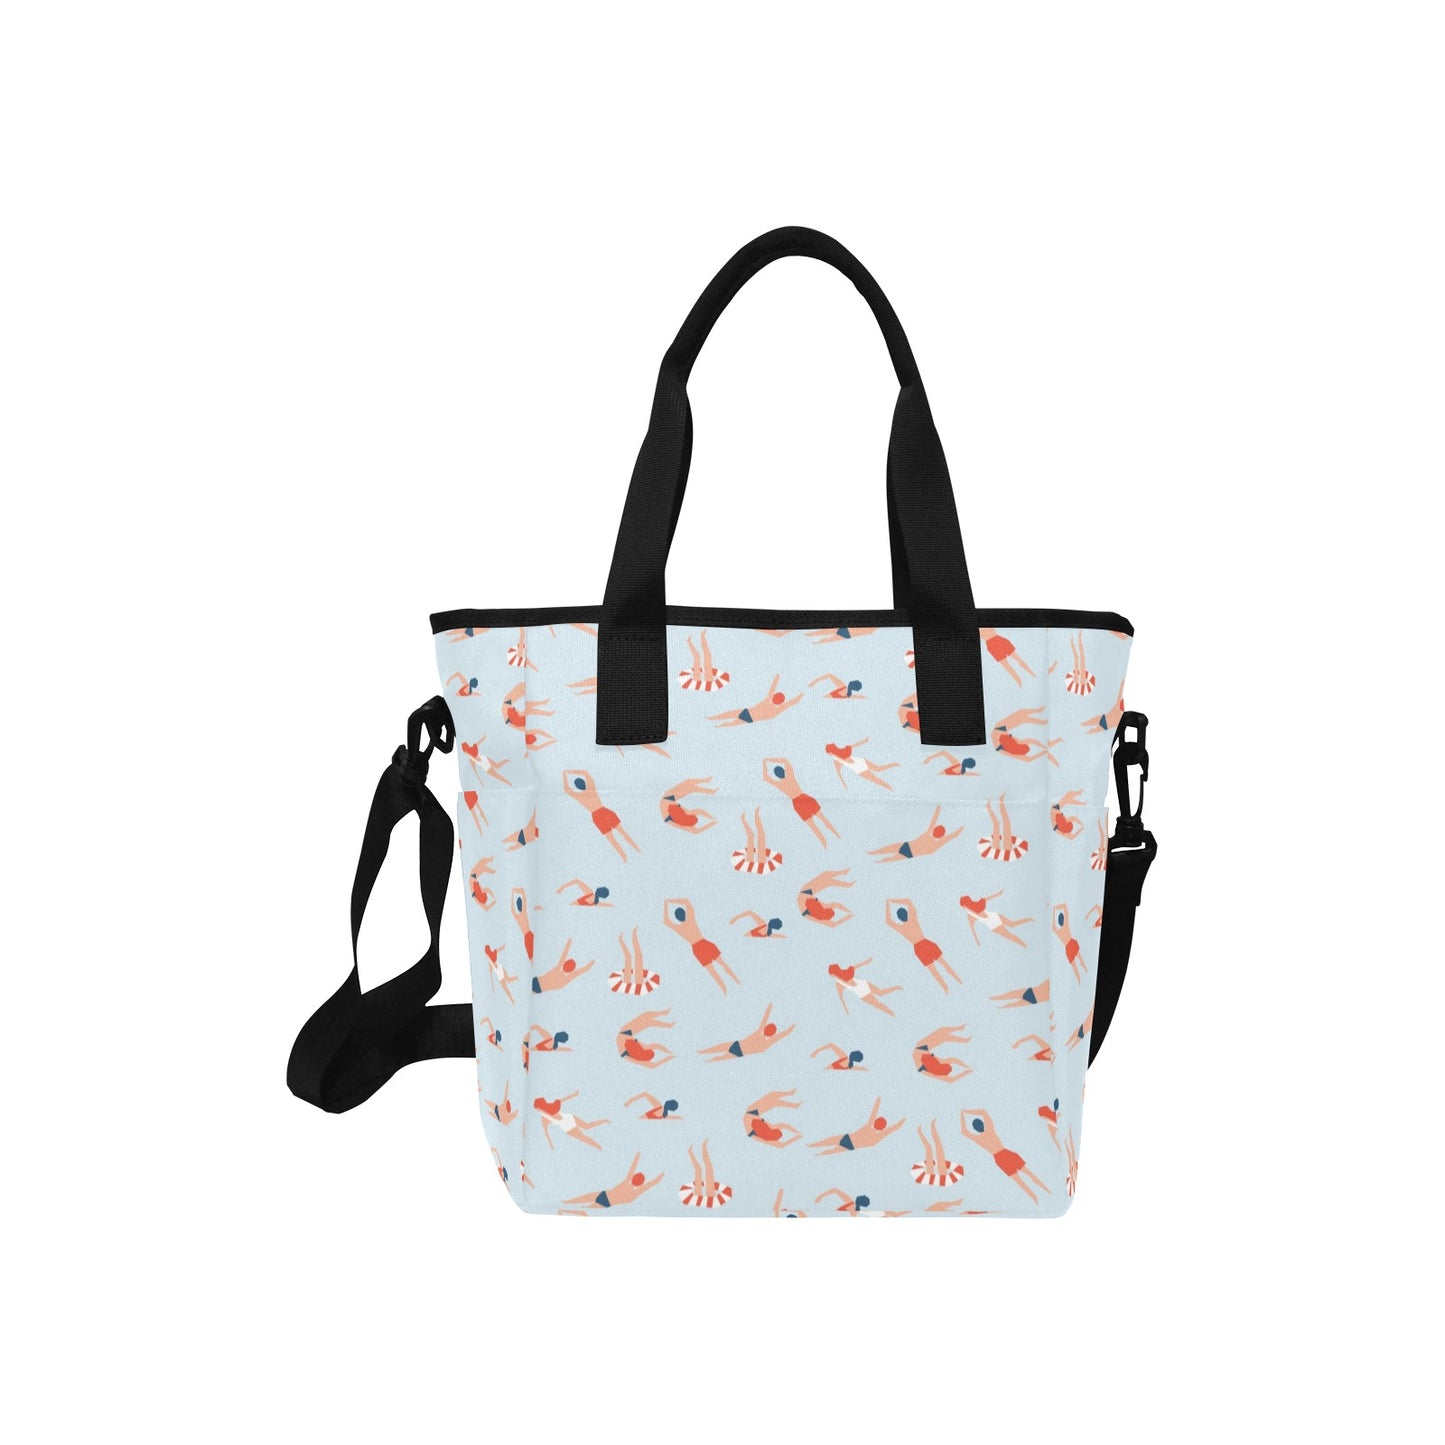 Summer Swim - Tote Bag with Shoulder Strap Nylon Tote Bag